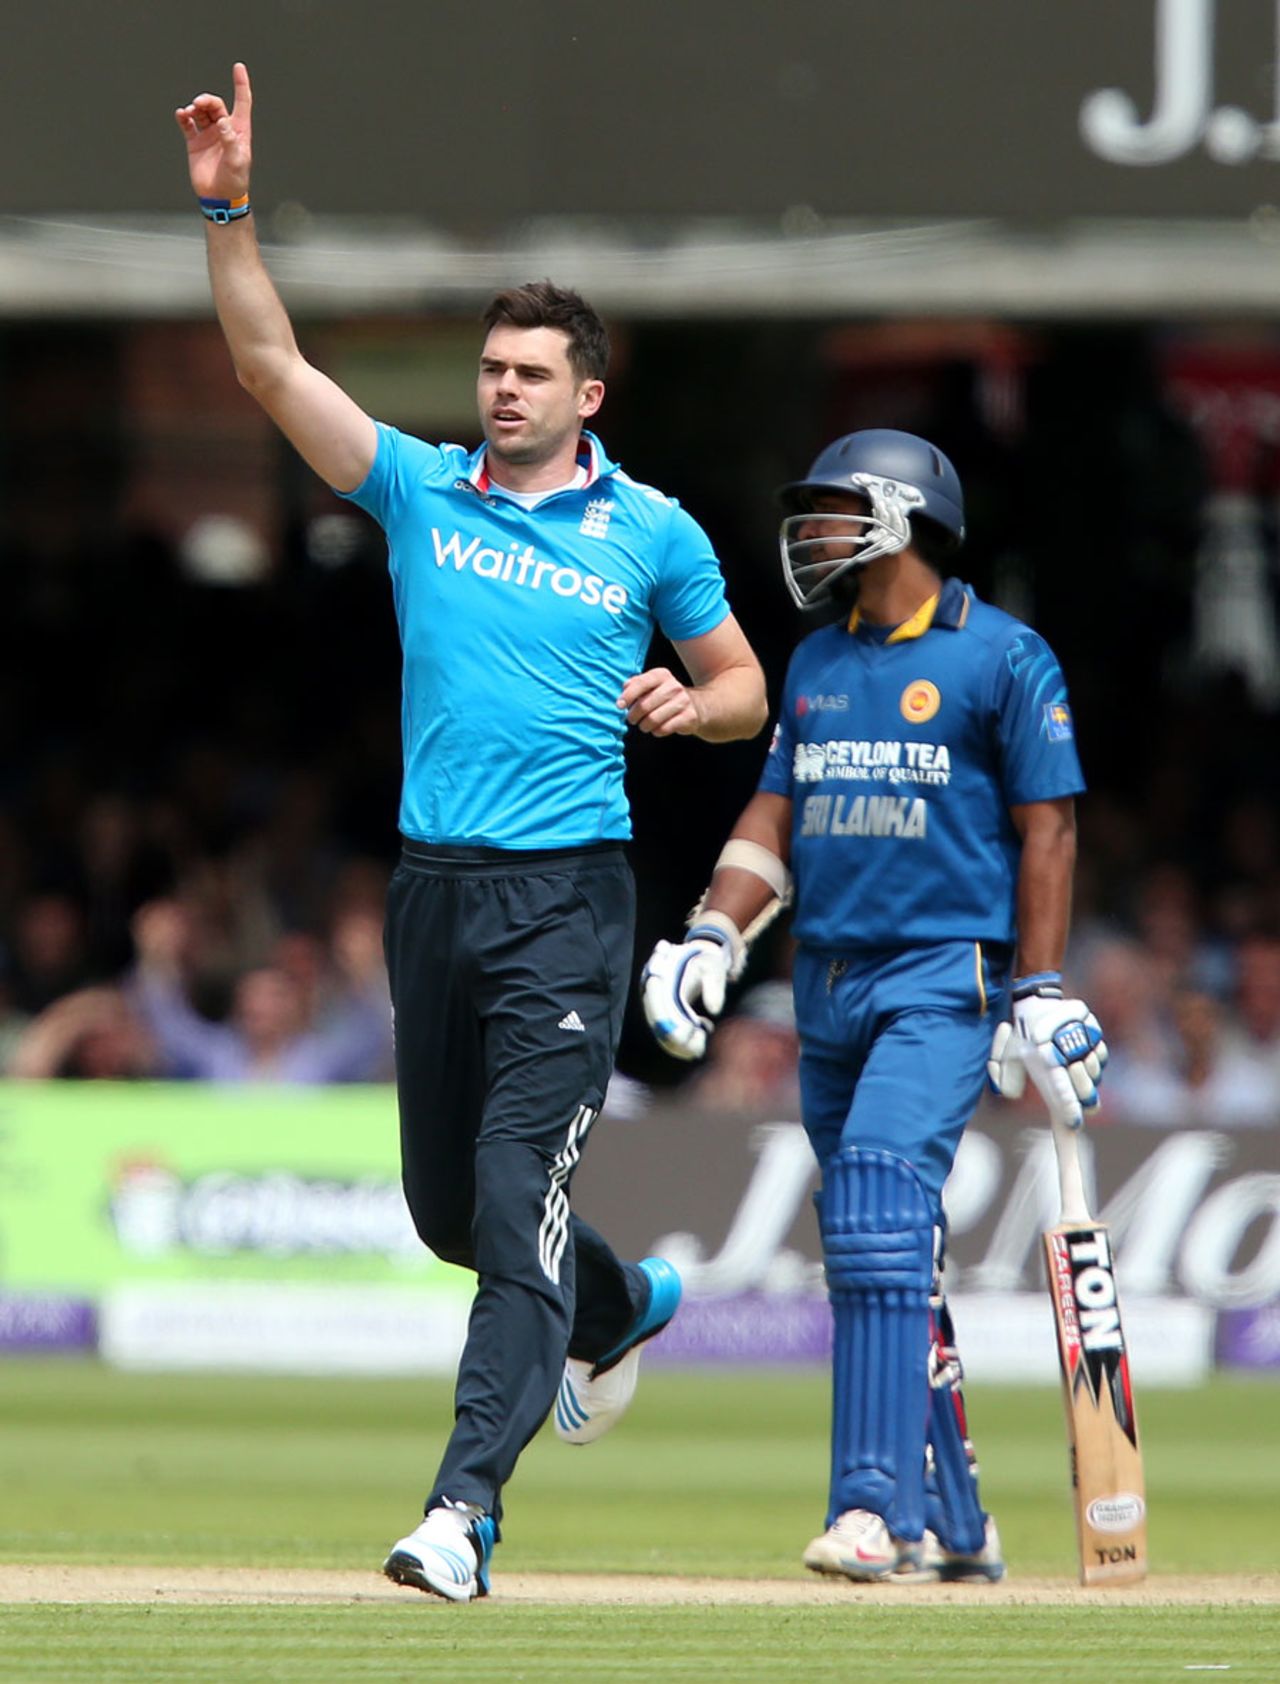 James Anderson claimed the wicket of Tillakaratne Dilshan, England v Sri Lanka, 4th ODI, Lord's, May 31, 2014